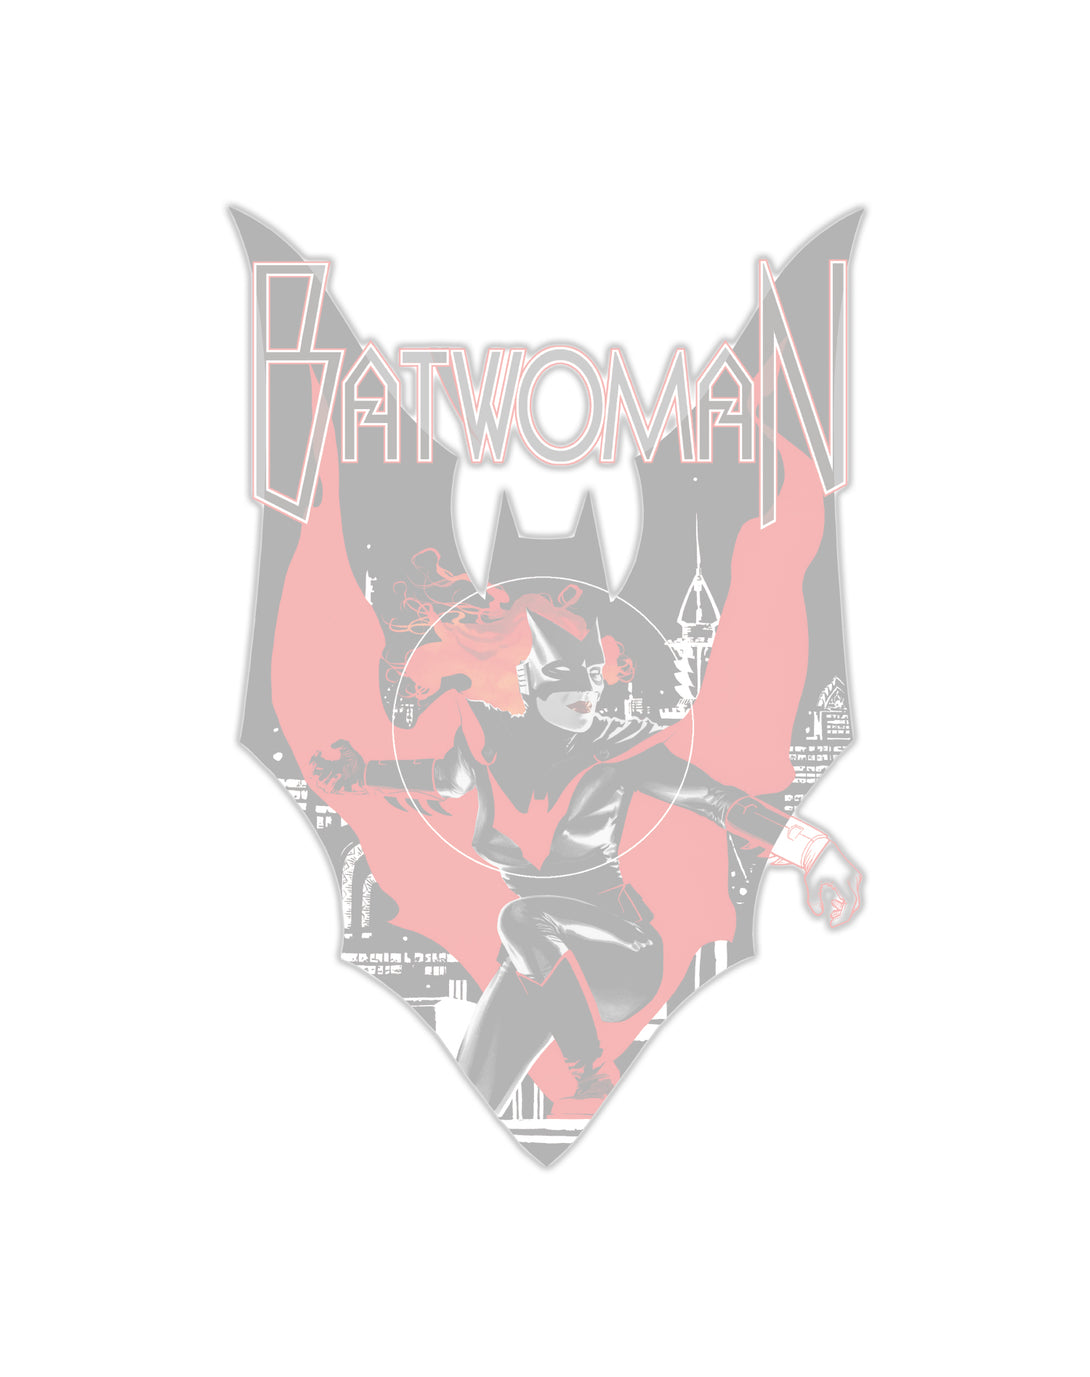 DC Comics Batwoman Cover JH Williams Official Sweatshirt White - Urban Species